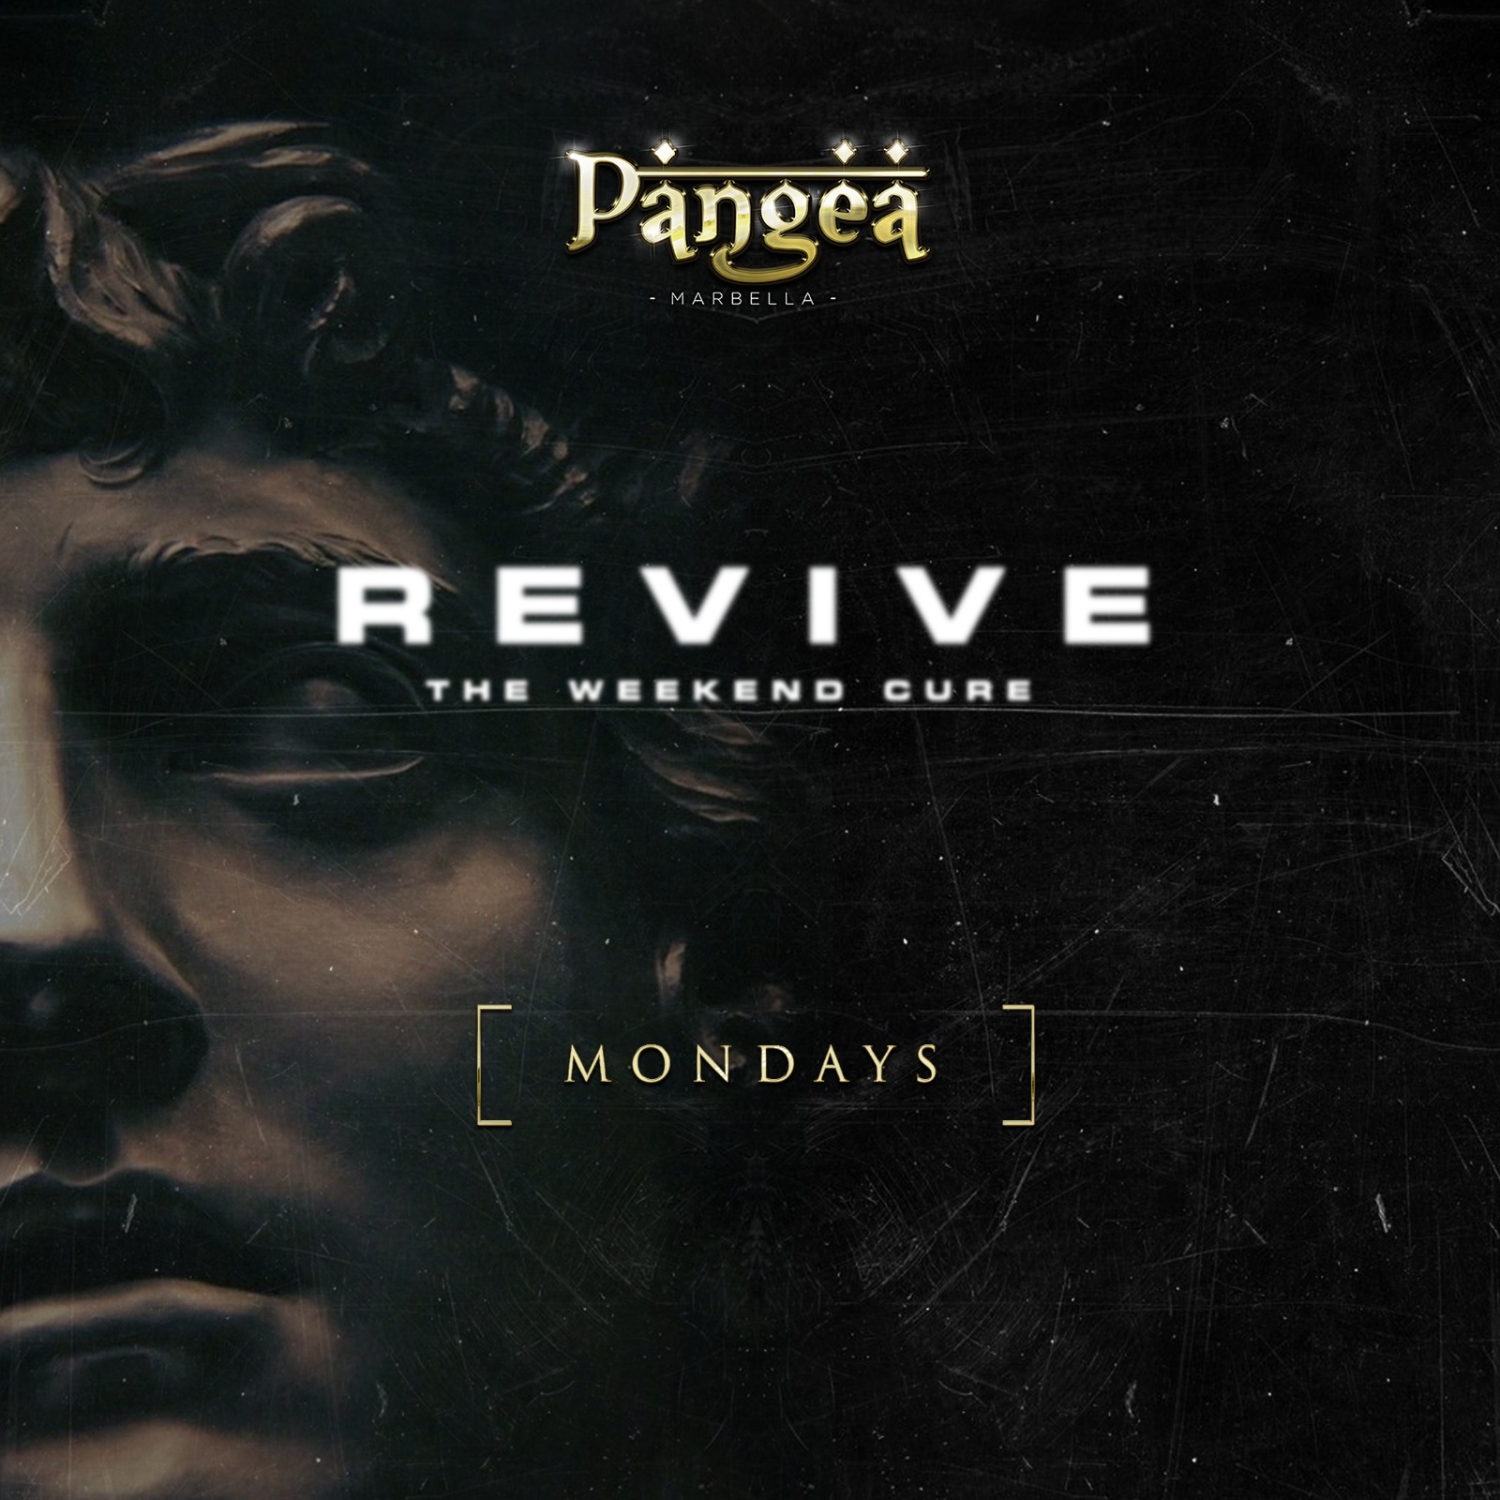 Revive at Pangea